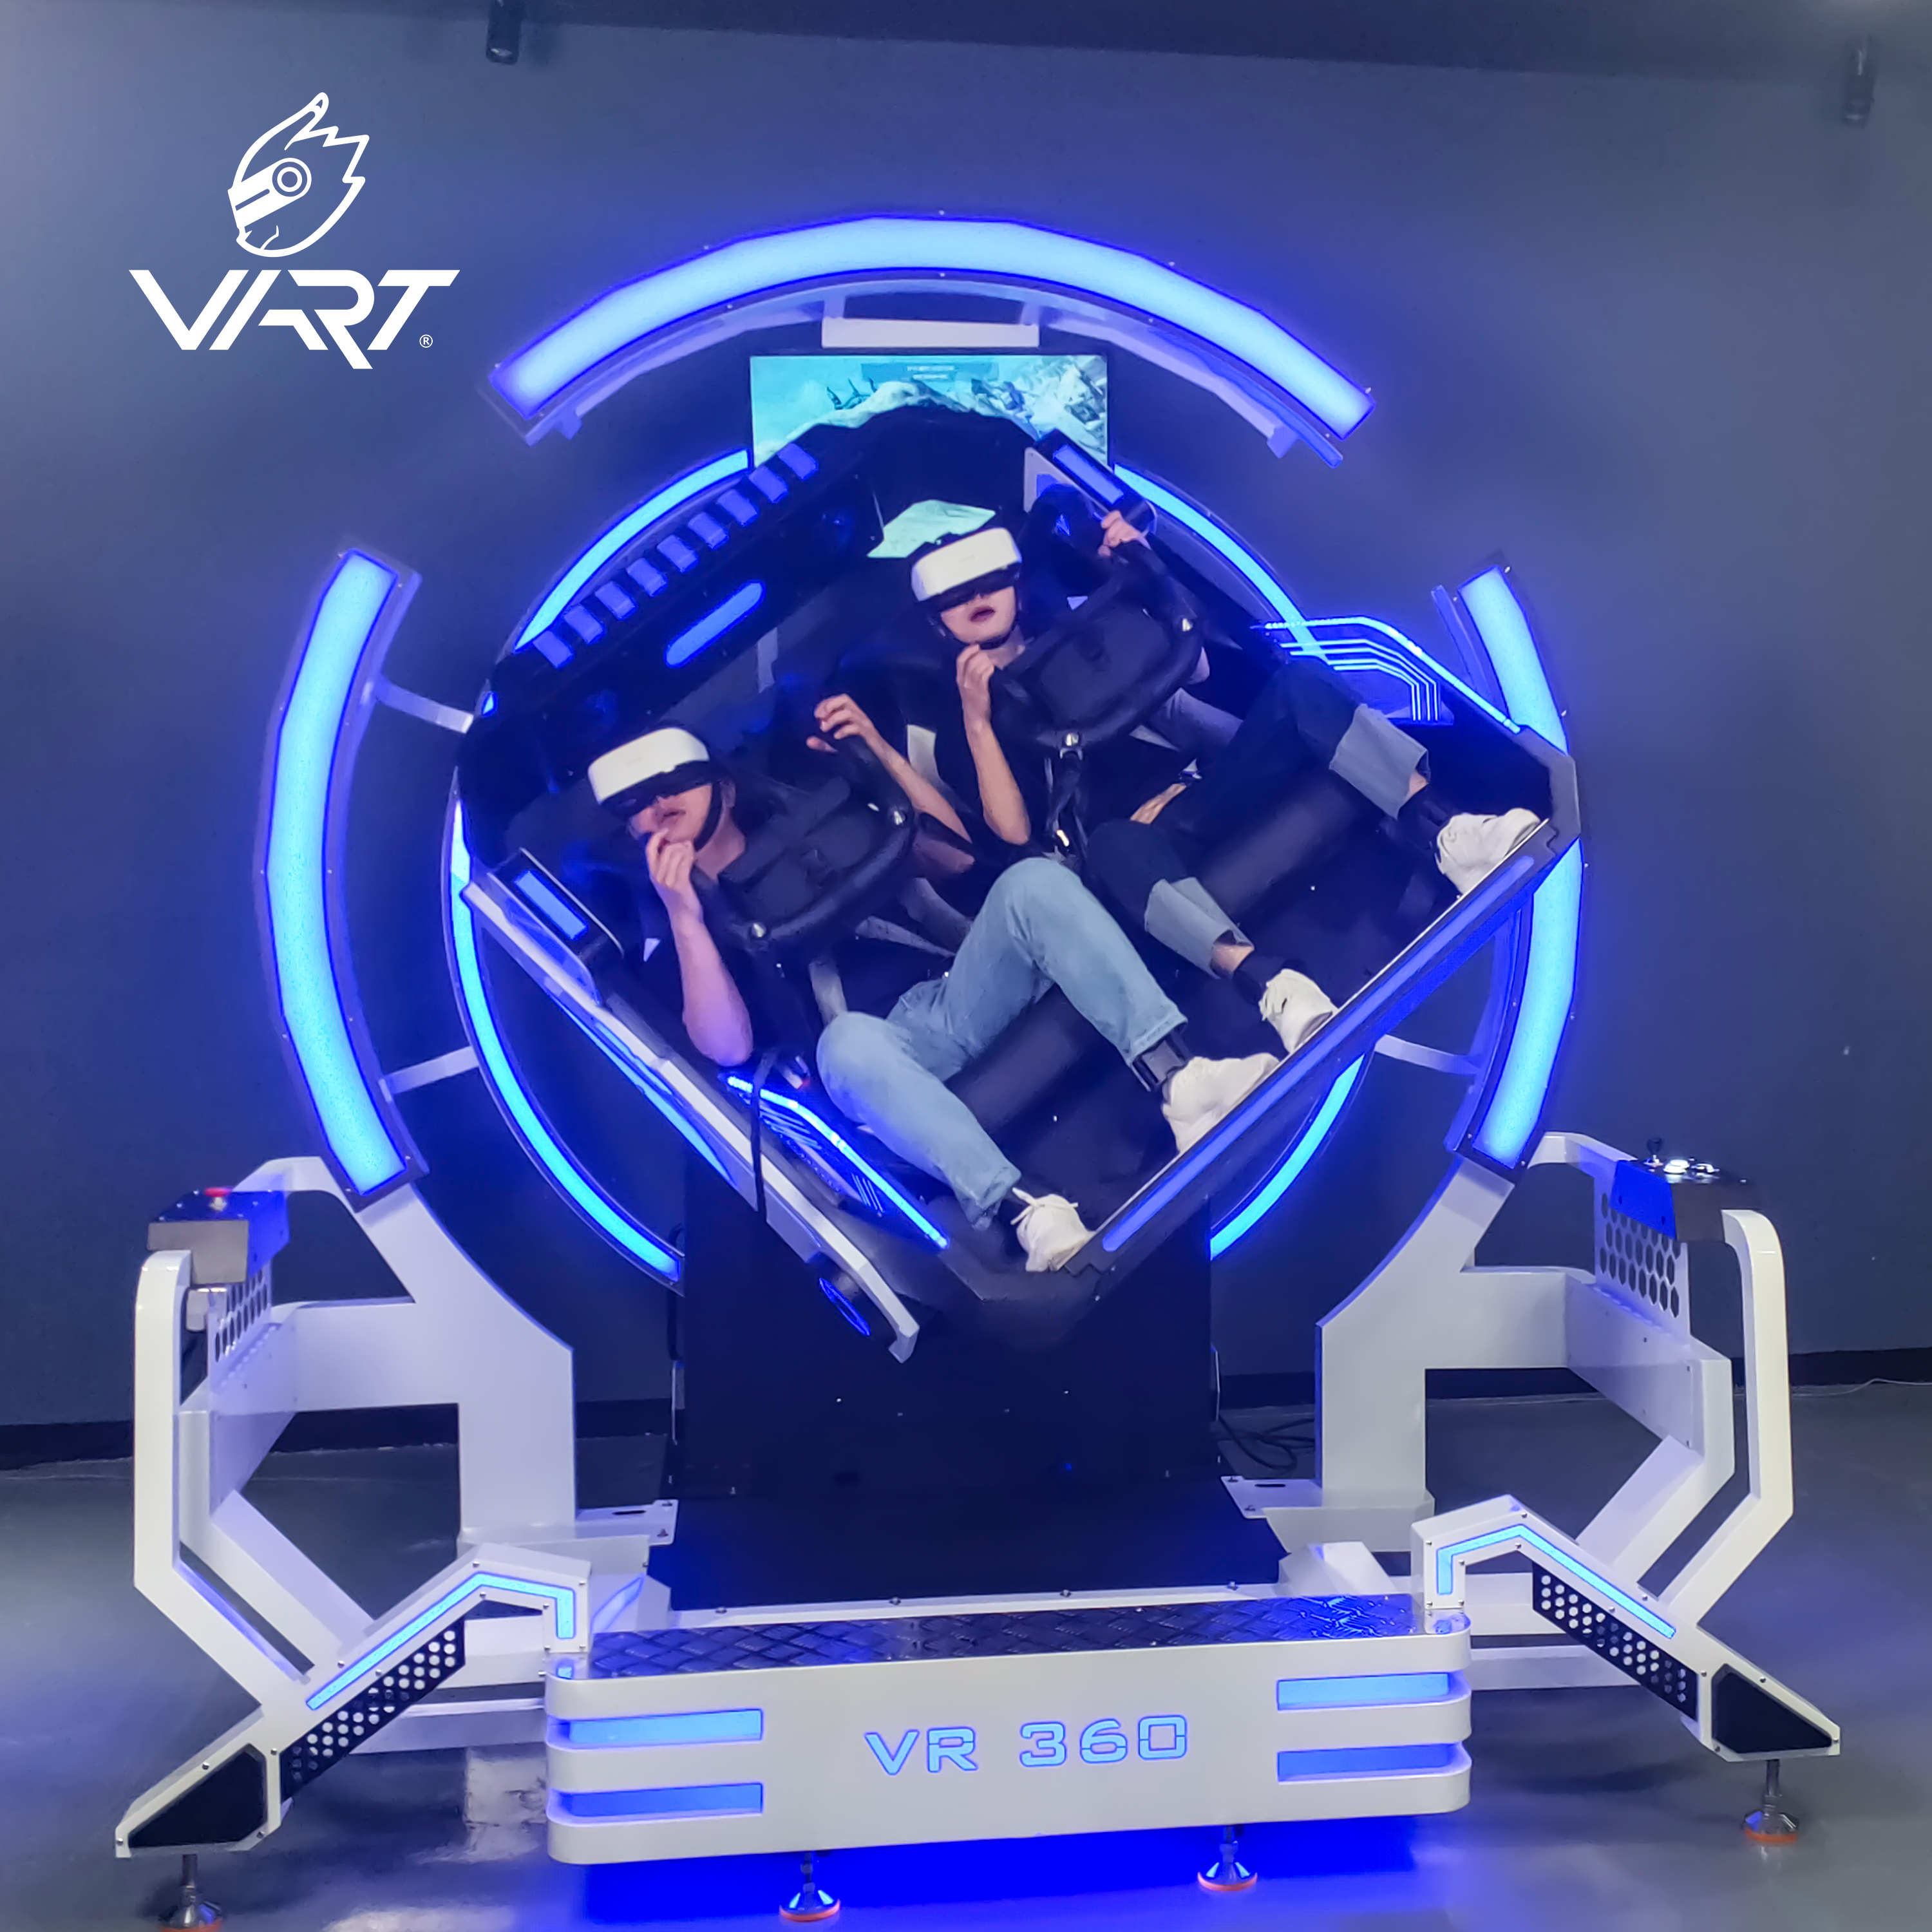 Ixabiso eliphantsi le-9d Vr 360 Degree Headtracking Roller Coaster Simulator Plus Virtual Reality Vibration 9d Cinema